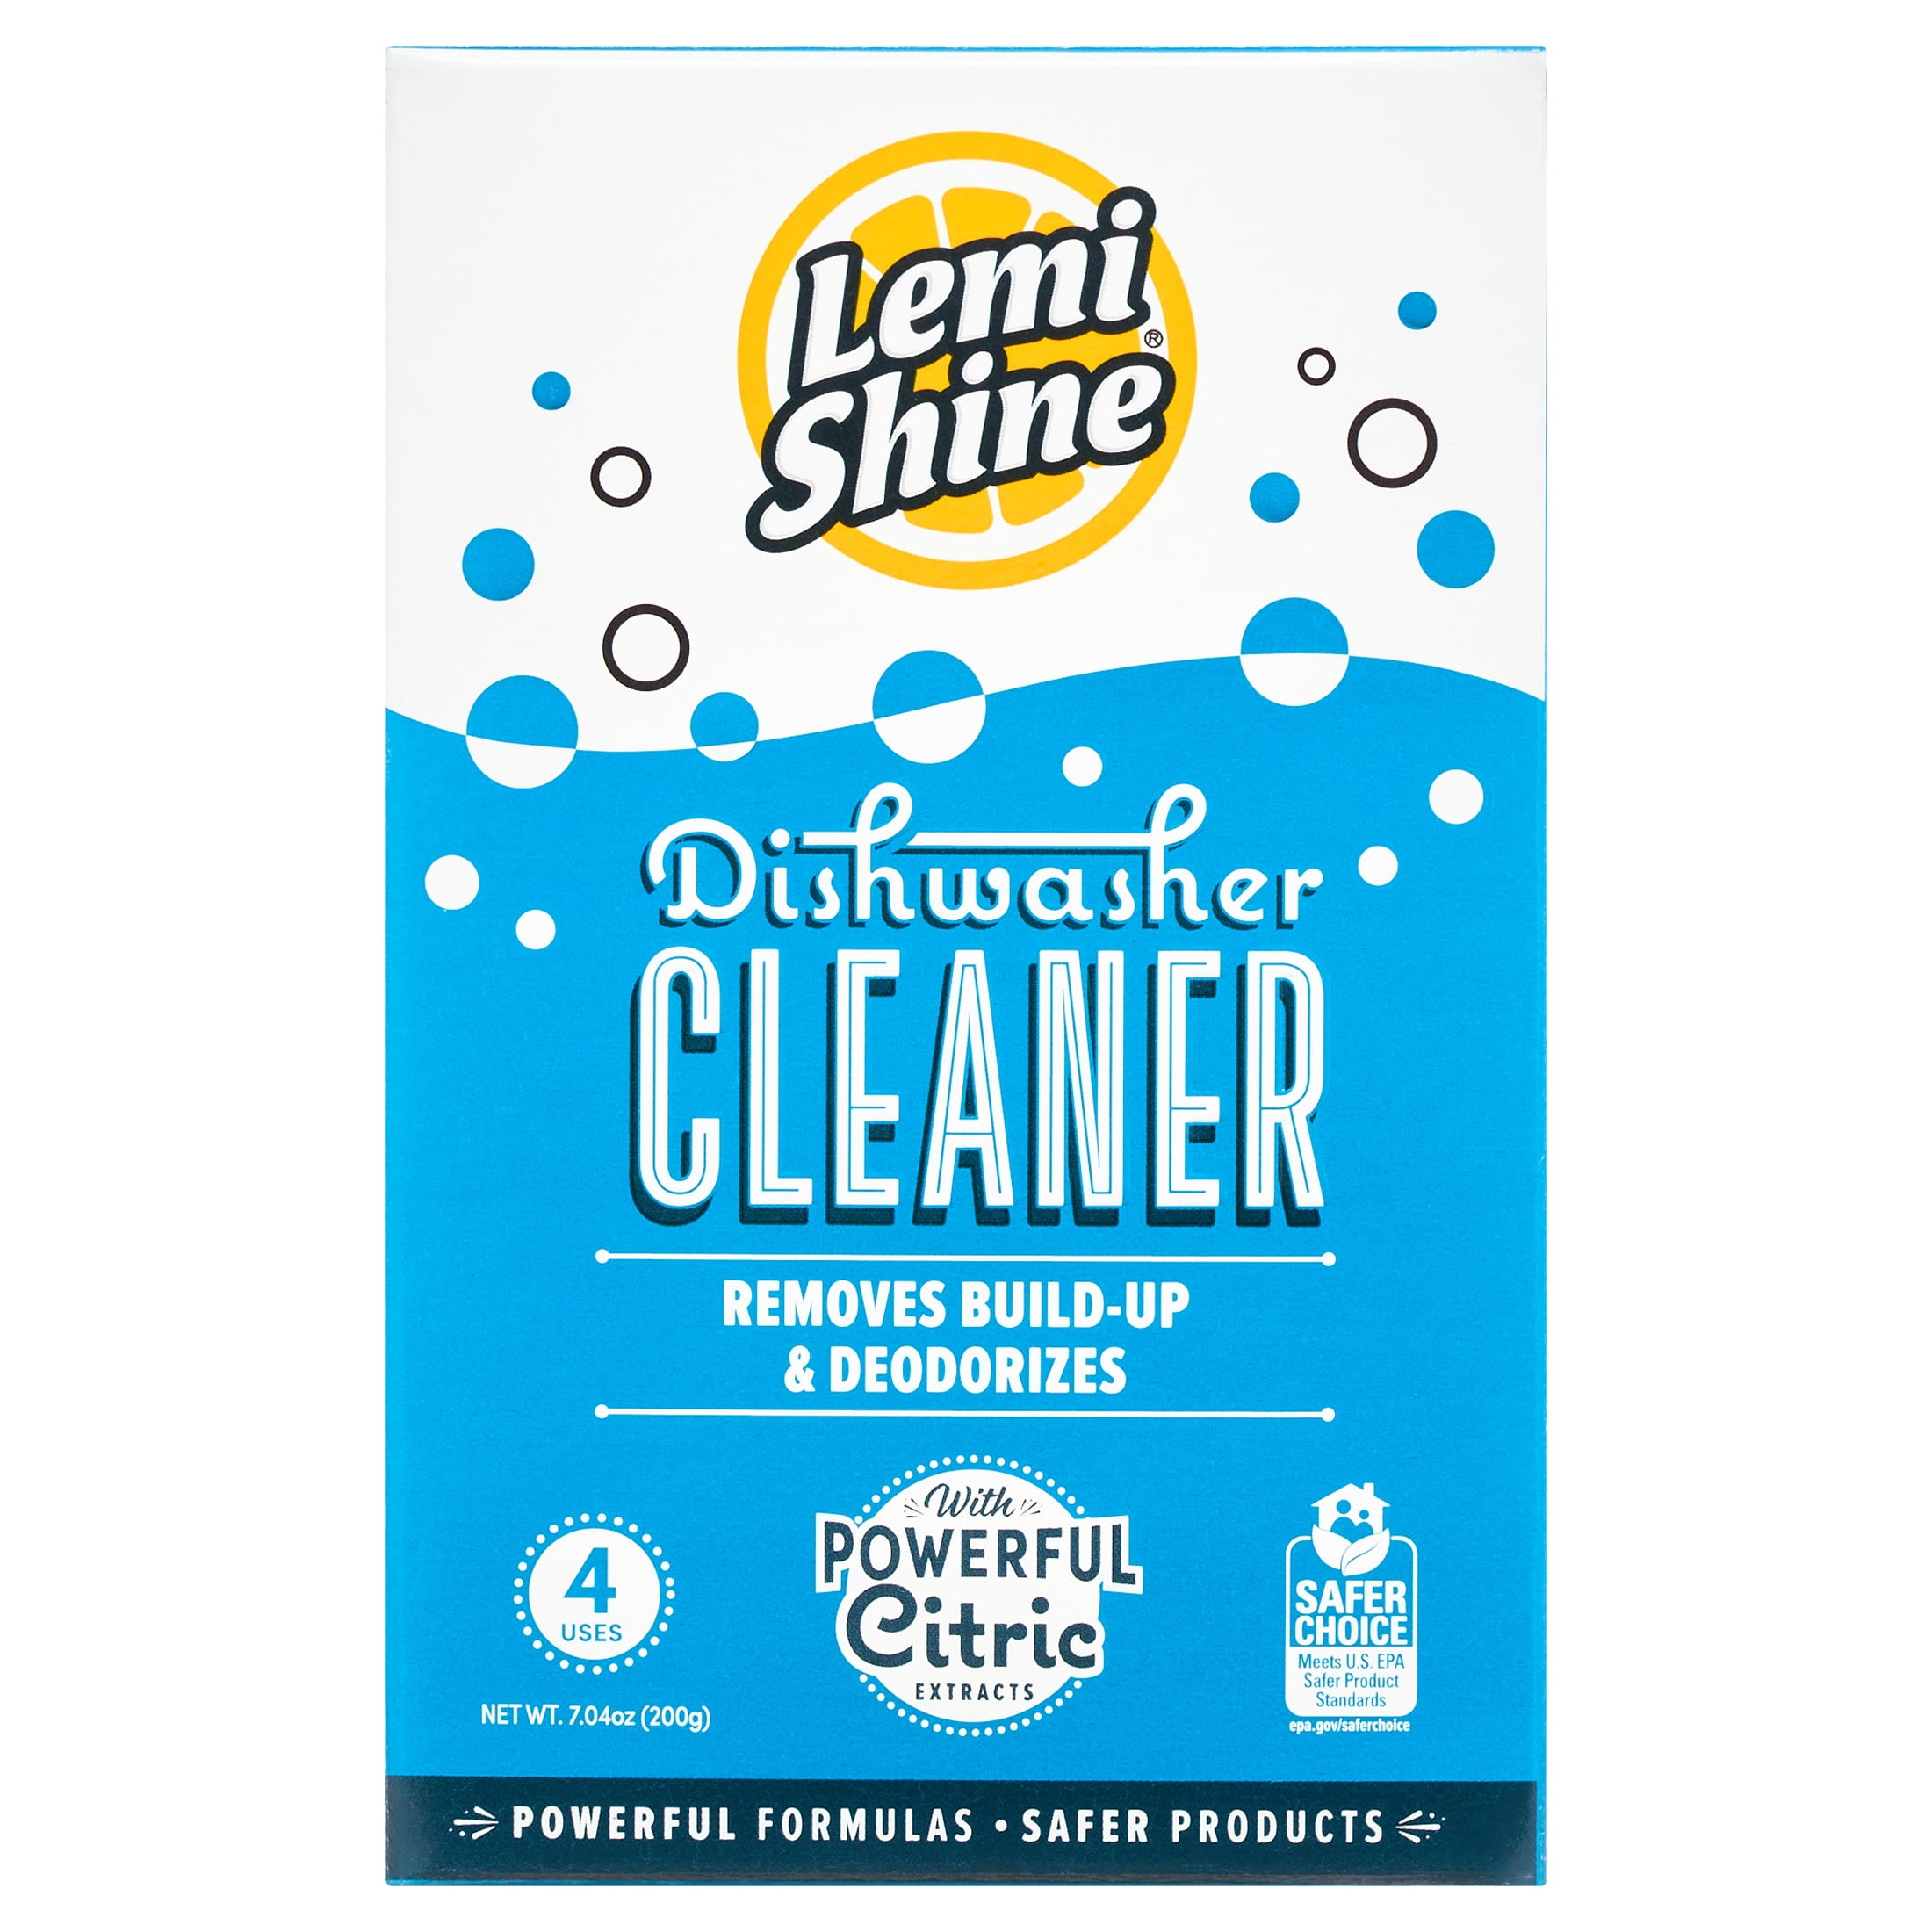  Lemi Shine Washing Machine Cleaner with Machine Wipes-Lemon - 4  ct : Health & Household